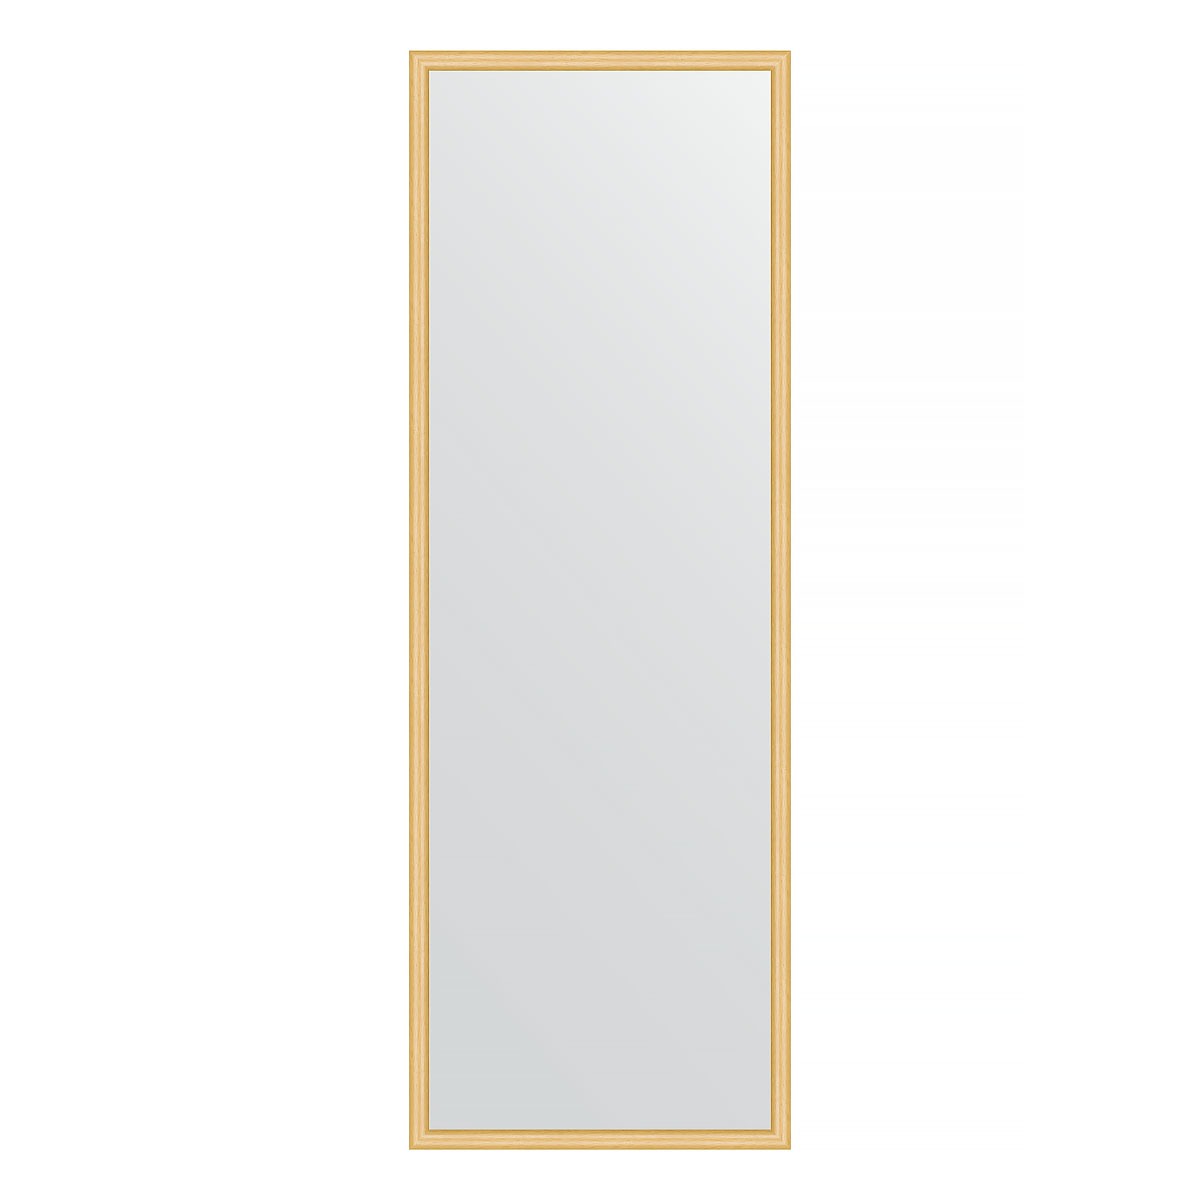 Зеркало в багетной раме Evoform сосна 22 мм 48х138 см зеркало evoform в багетной раме 56х146см bx 1076 bx 1076